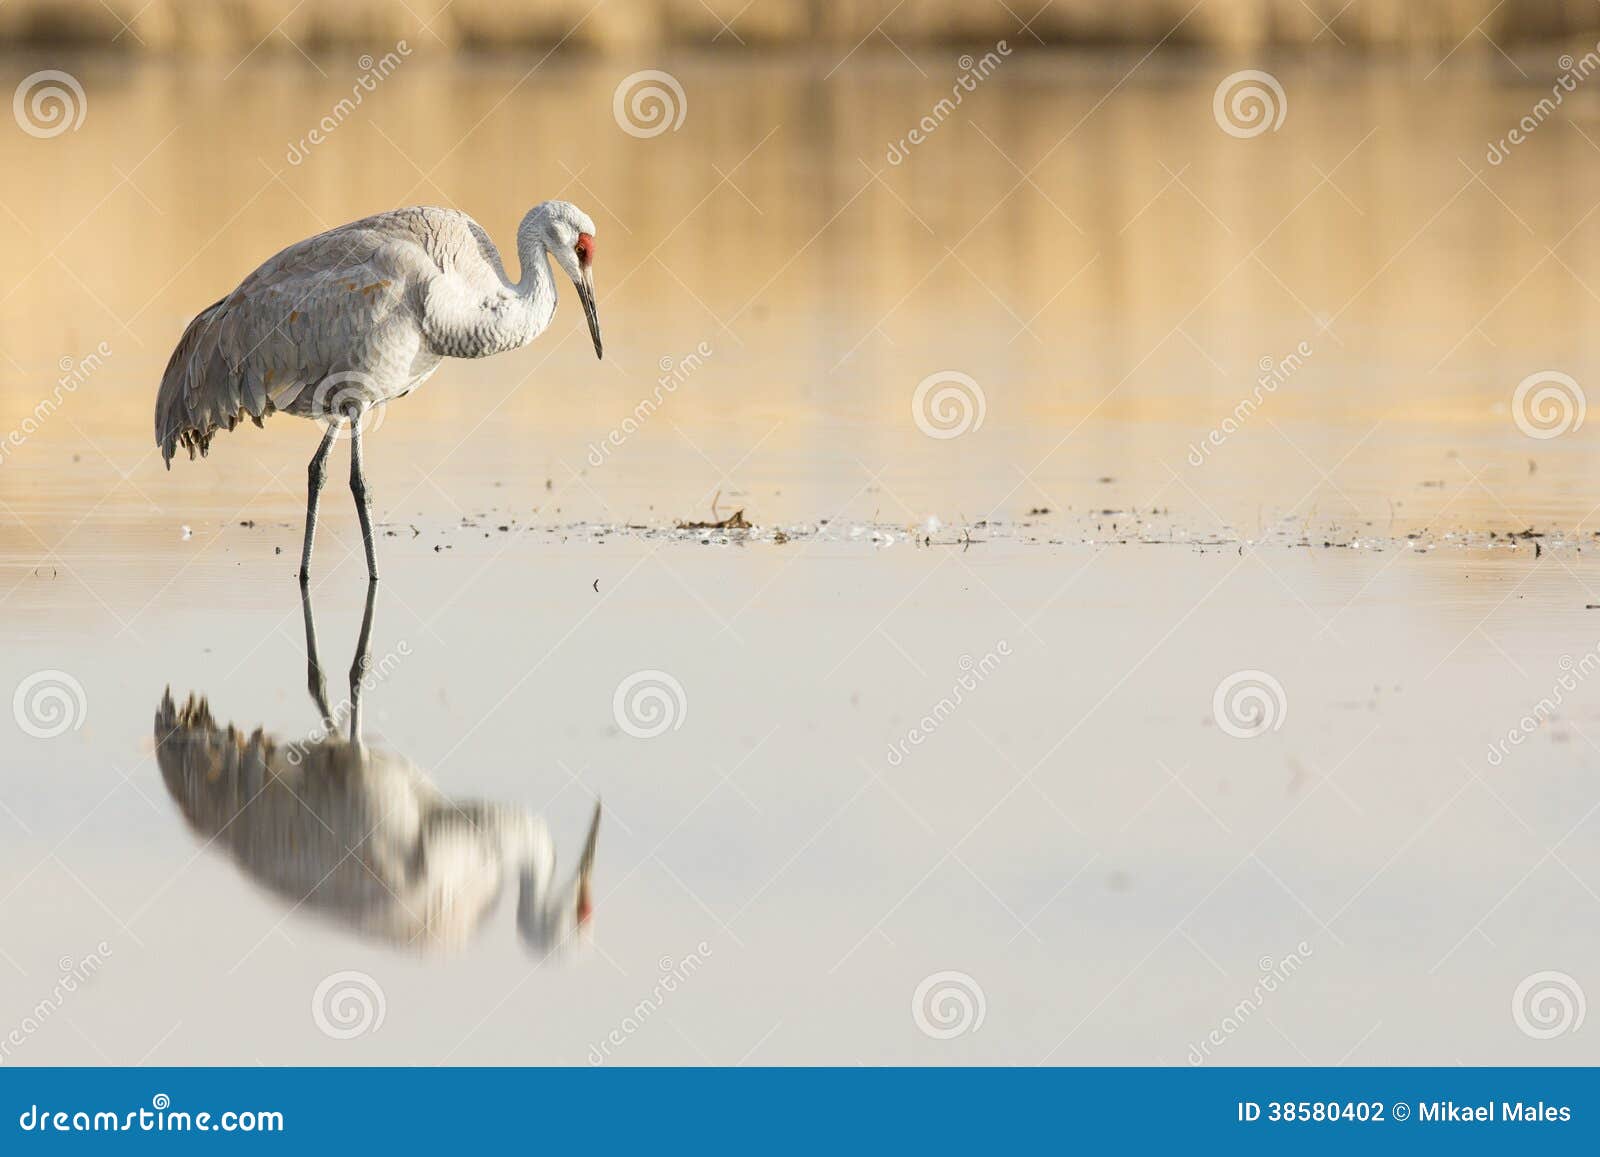 reflective image of sandhill crane